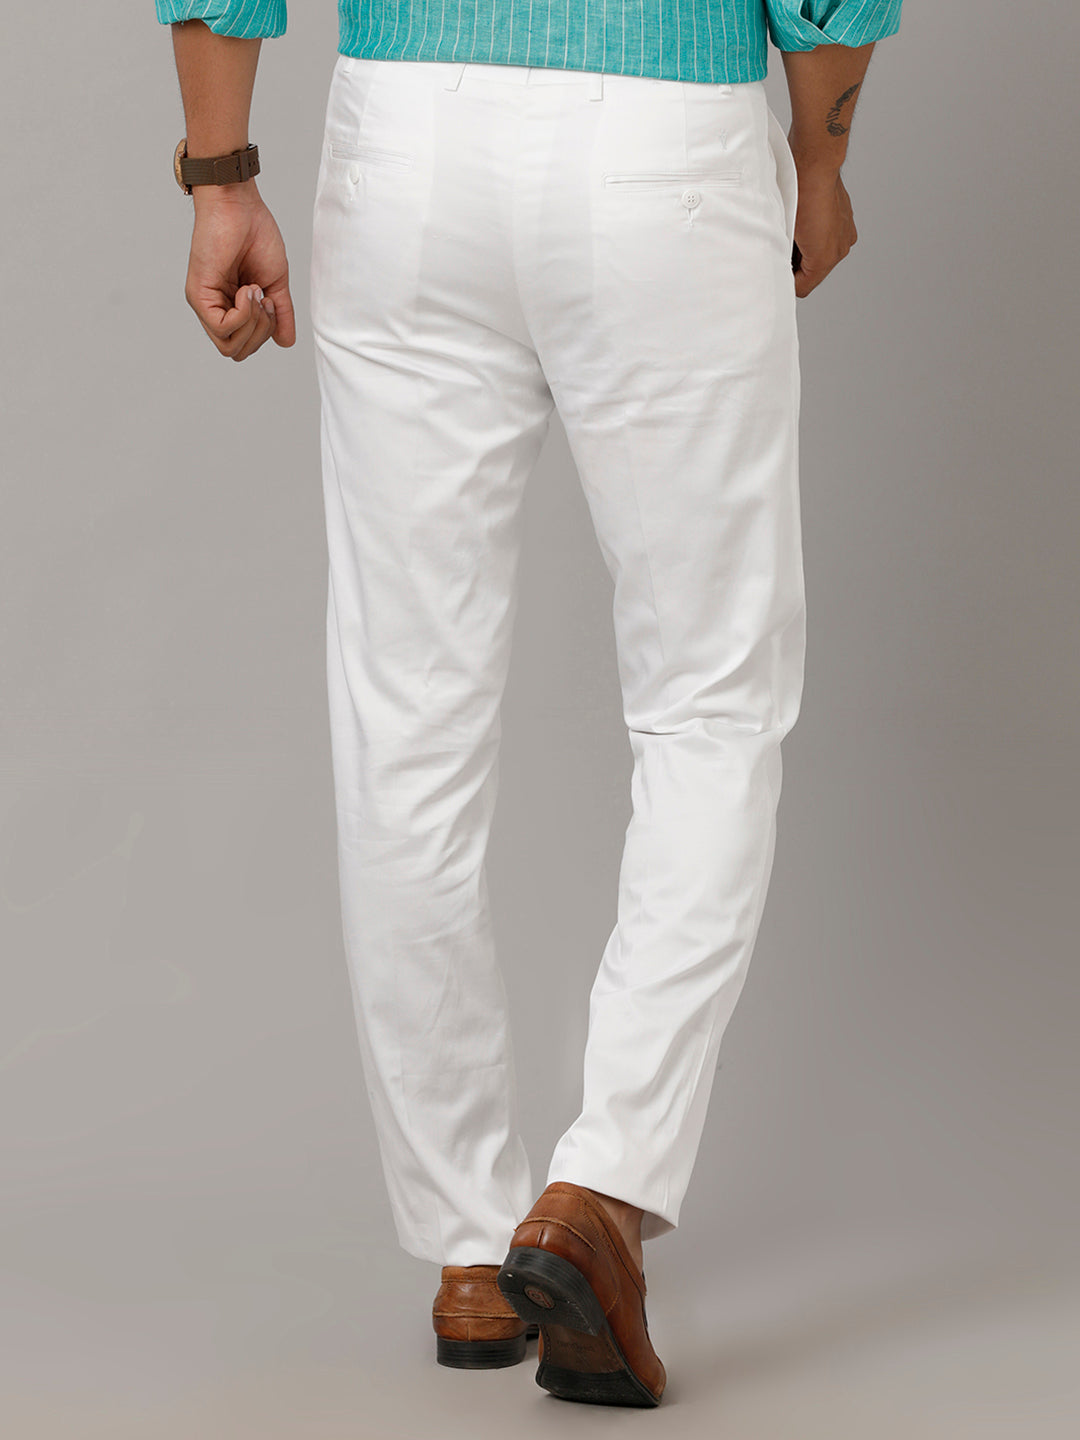 Mens Trim Fit Cotton White Pants Smart Stretch-Back view